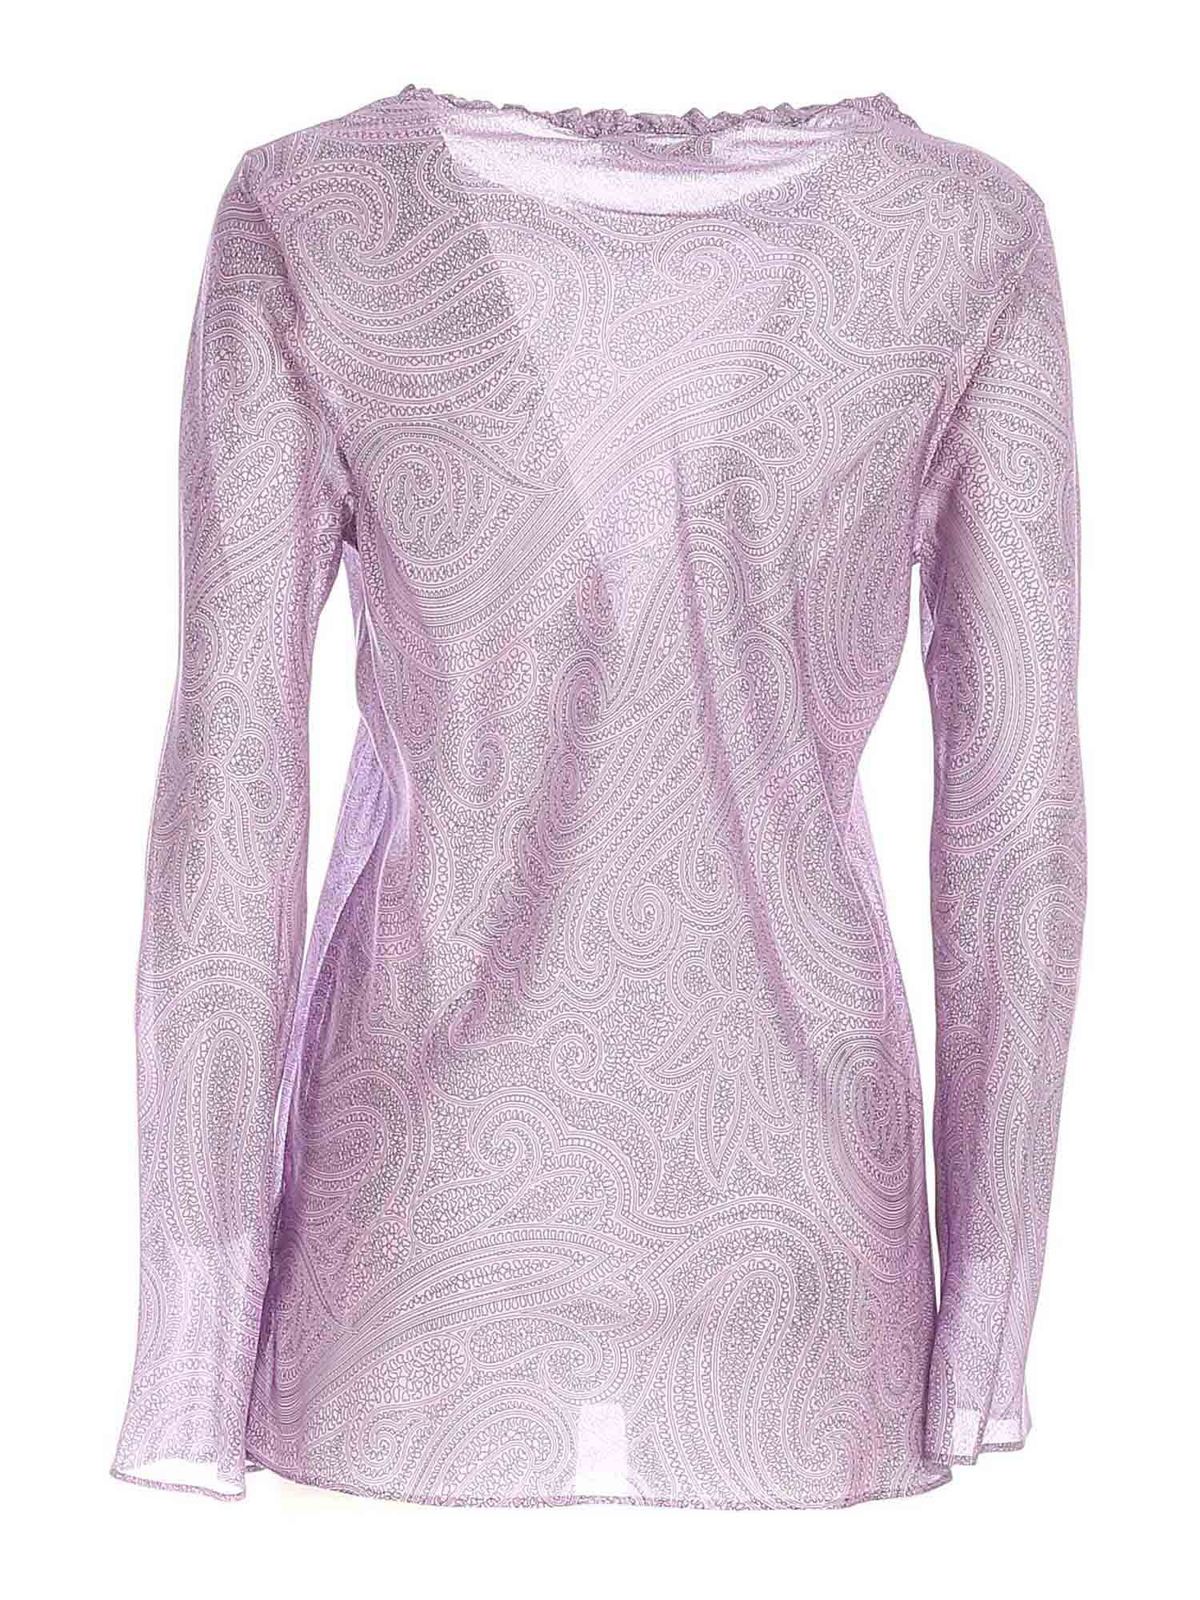 Blouses Le Tricot Perugia - Cashmere print blouse in purple - 6615473277483